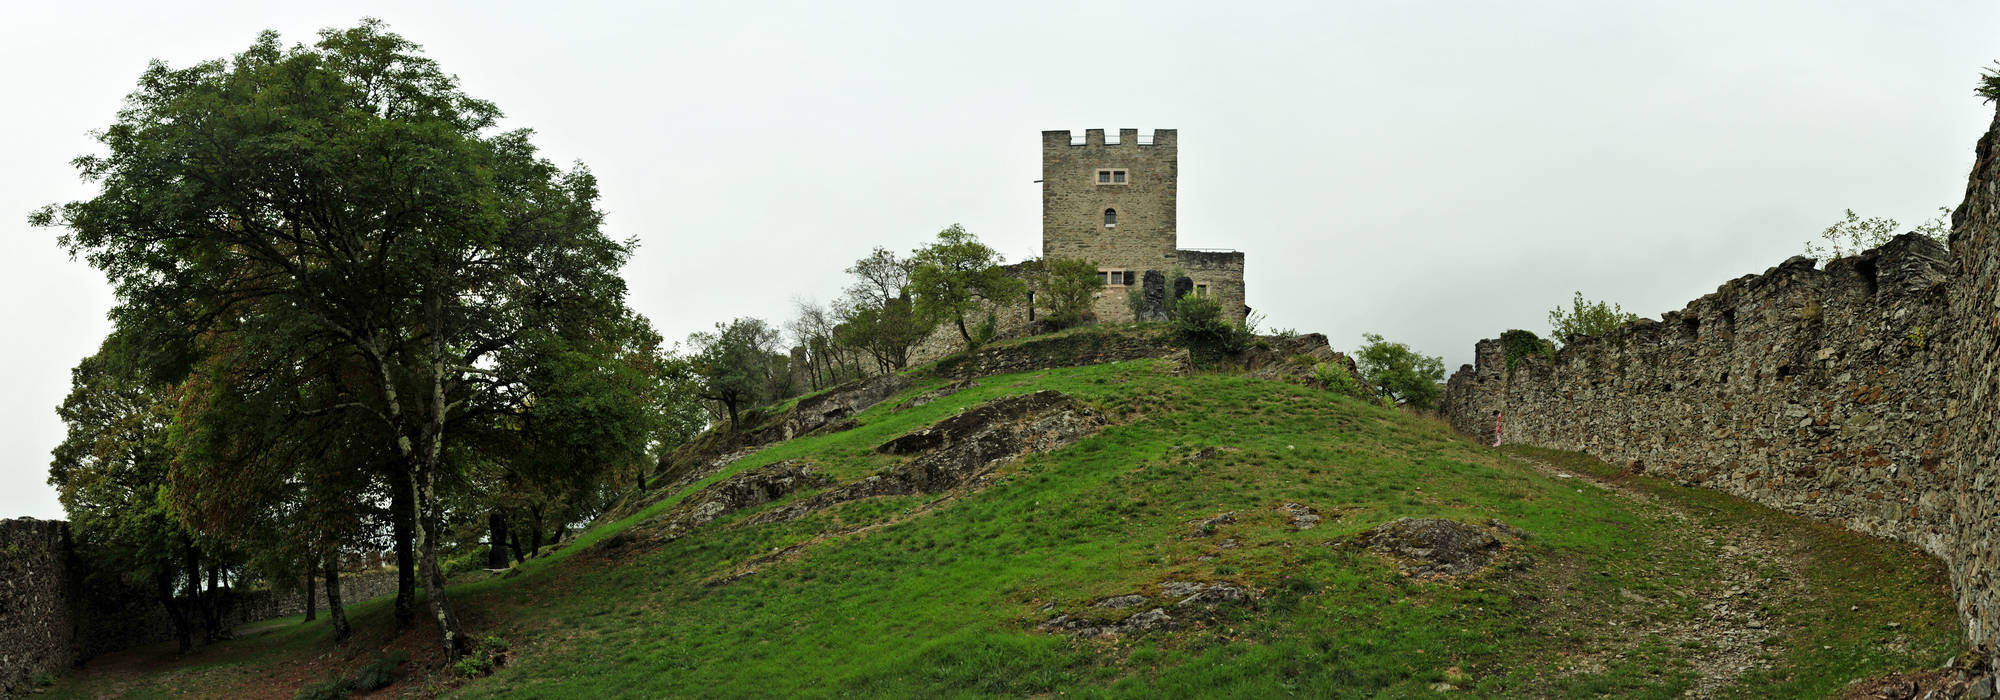 Castello di Pergine Valsugana